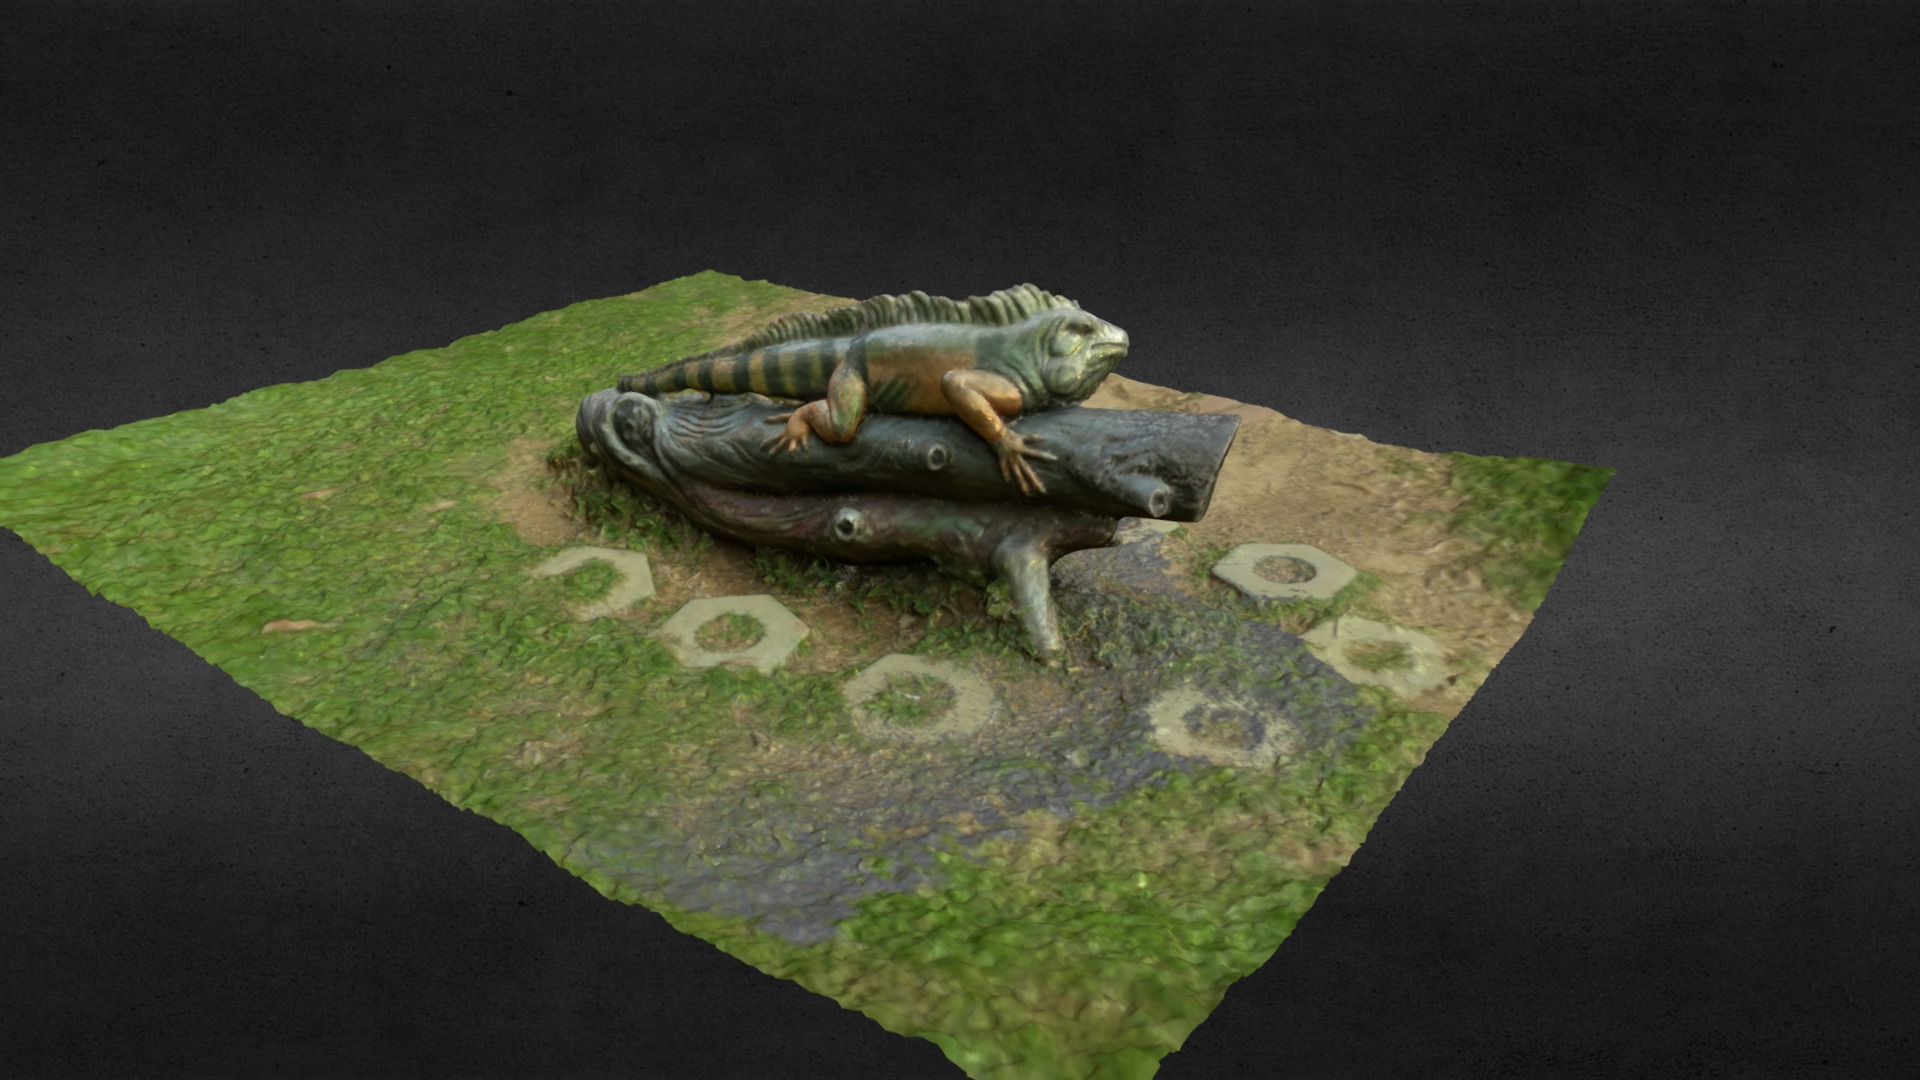 3D model Tuen Mun Park – Lizard - This is a 3D model of the Tuen Mun Park - Lizard. The 3D model is about a turtle on a rock.